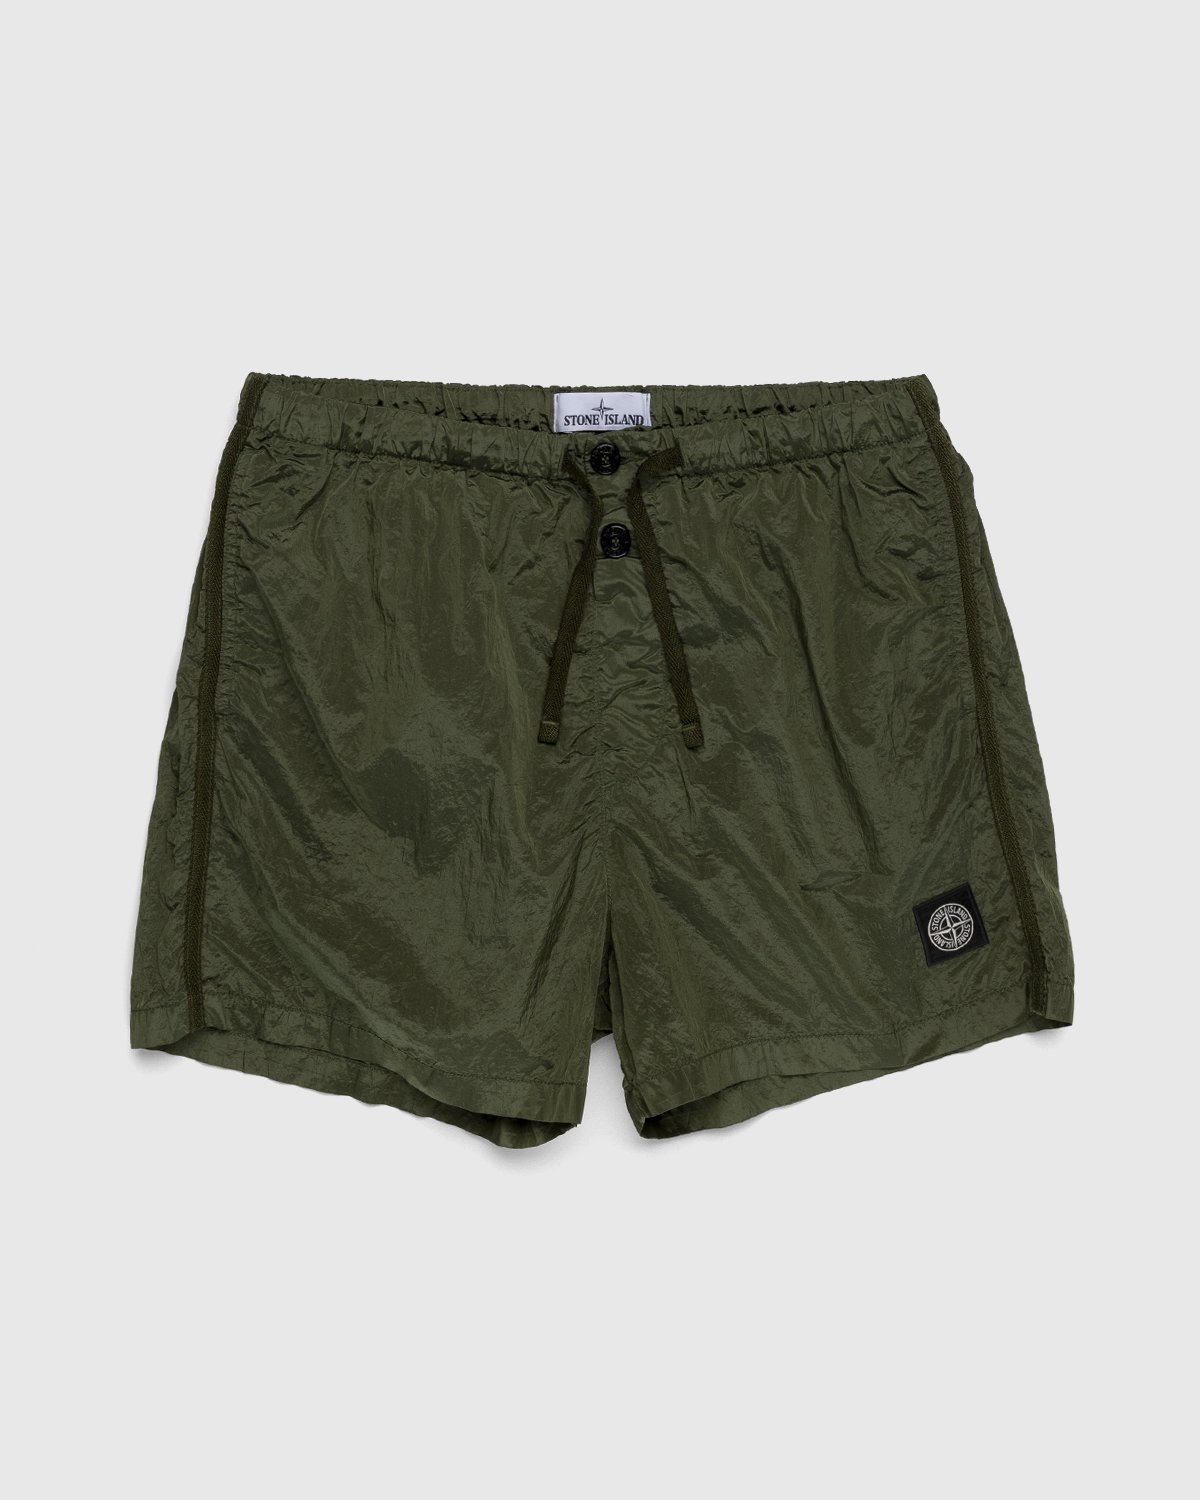 Stone Island - B0643 Nylon Metal Bermuda Shorts Olive - Clothing - Green - Image 1